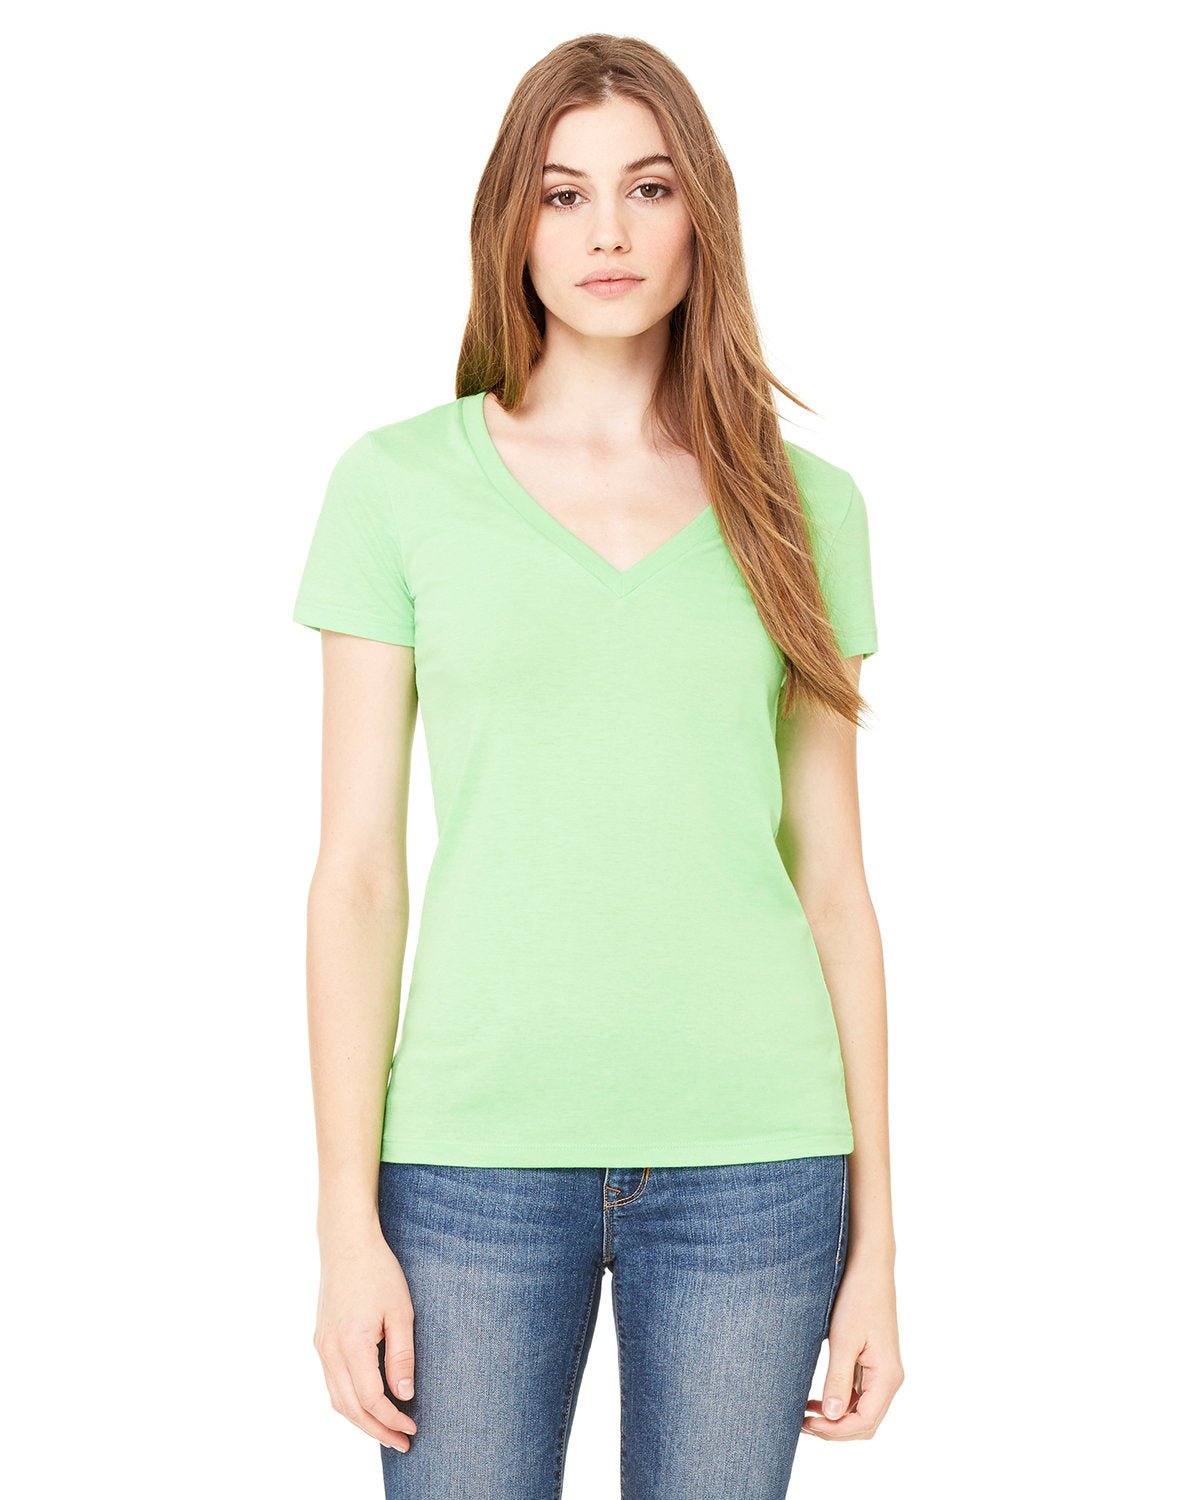 B6035-Bella + Canvas-NEON GREEN-Bella + Canvas-T-Shirts-1